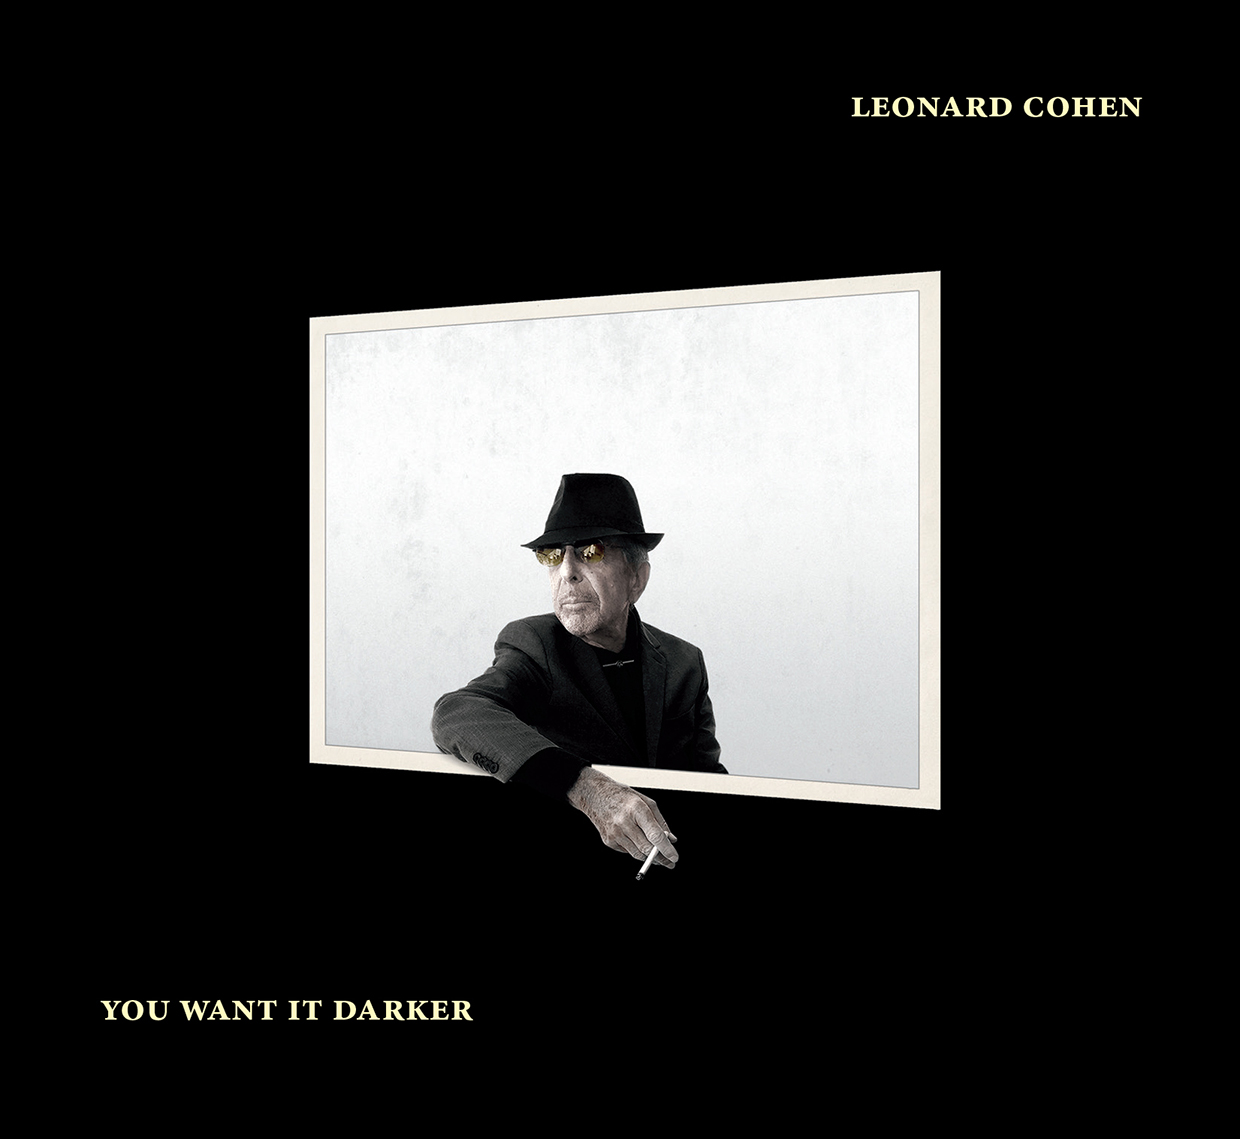 leonard-cohen-you-want-it-darker-album-art-2016-billboard-1240